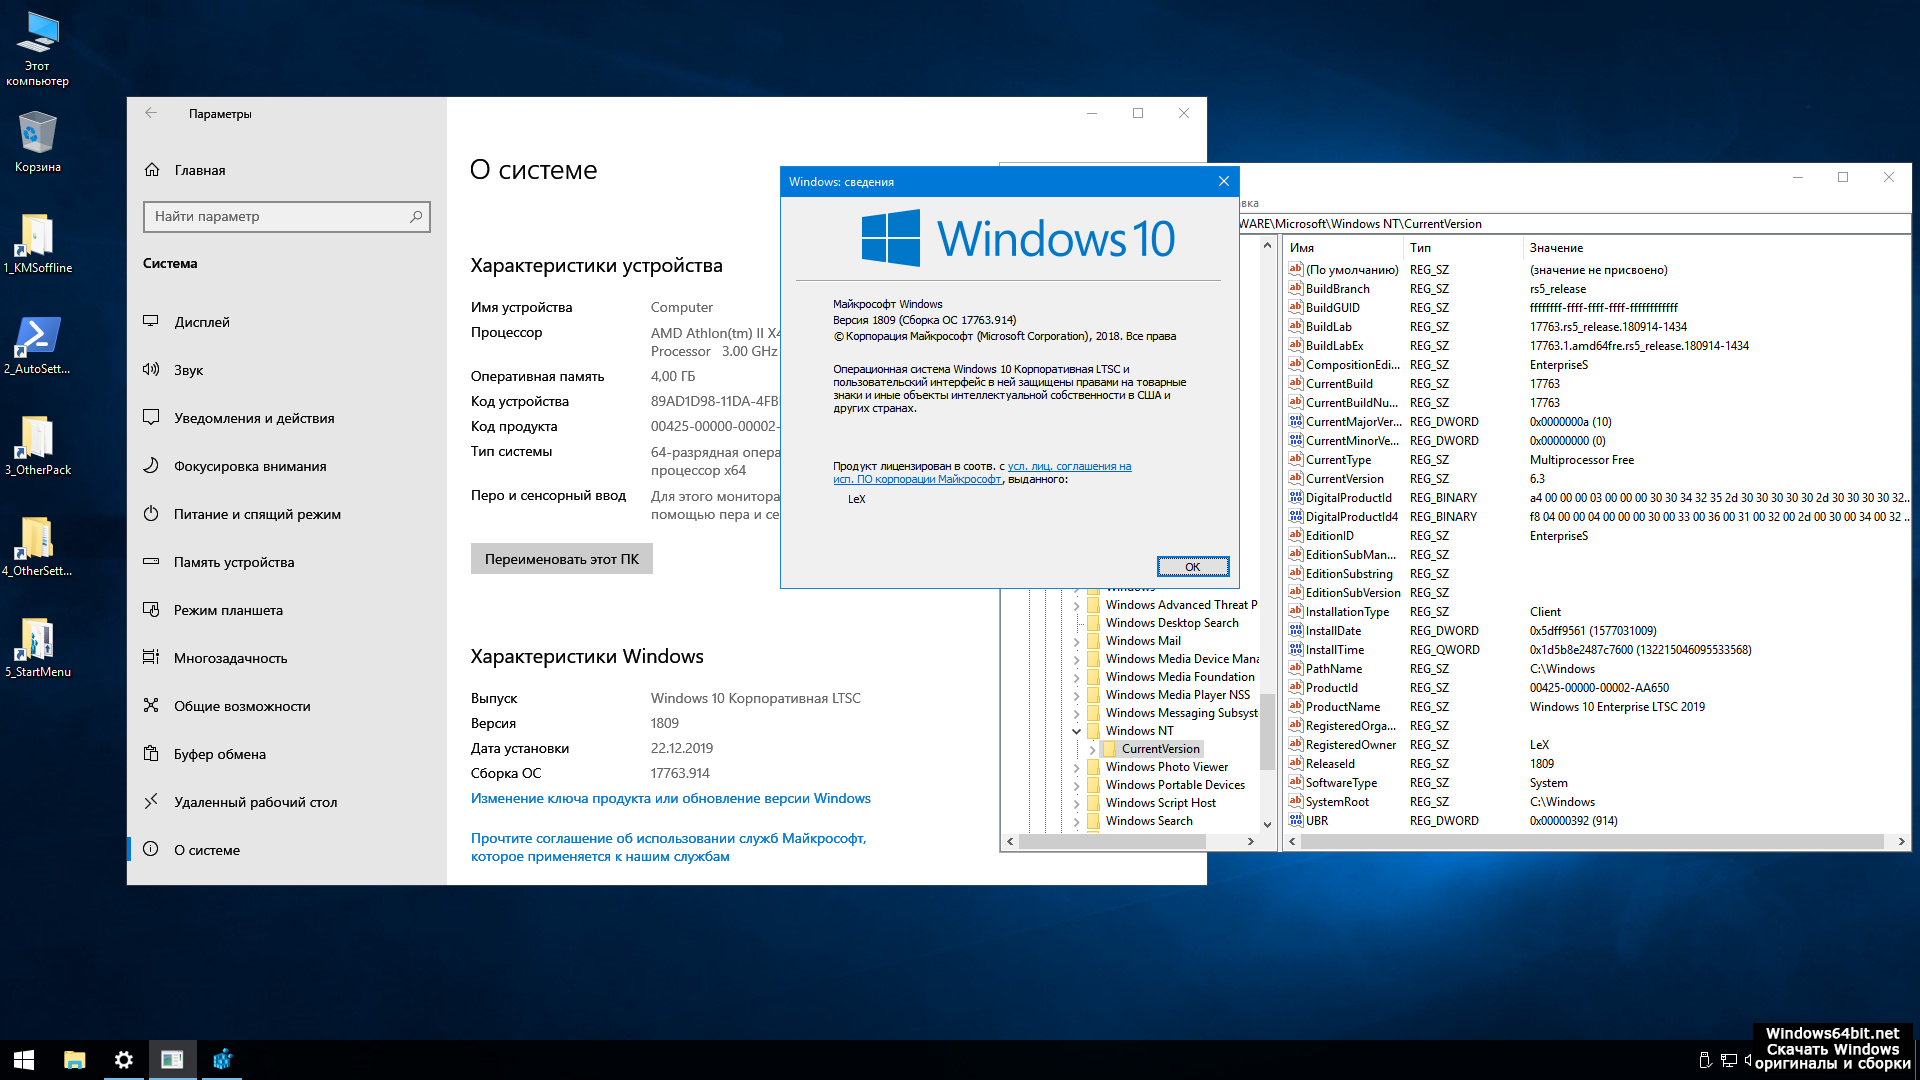 Windows 10 как основная. Windows 10 Enterprise (корпоративная). Винда 10. Редакции виндовс 10. Система виндовс 10.